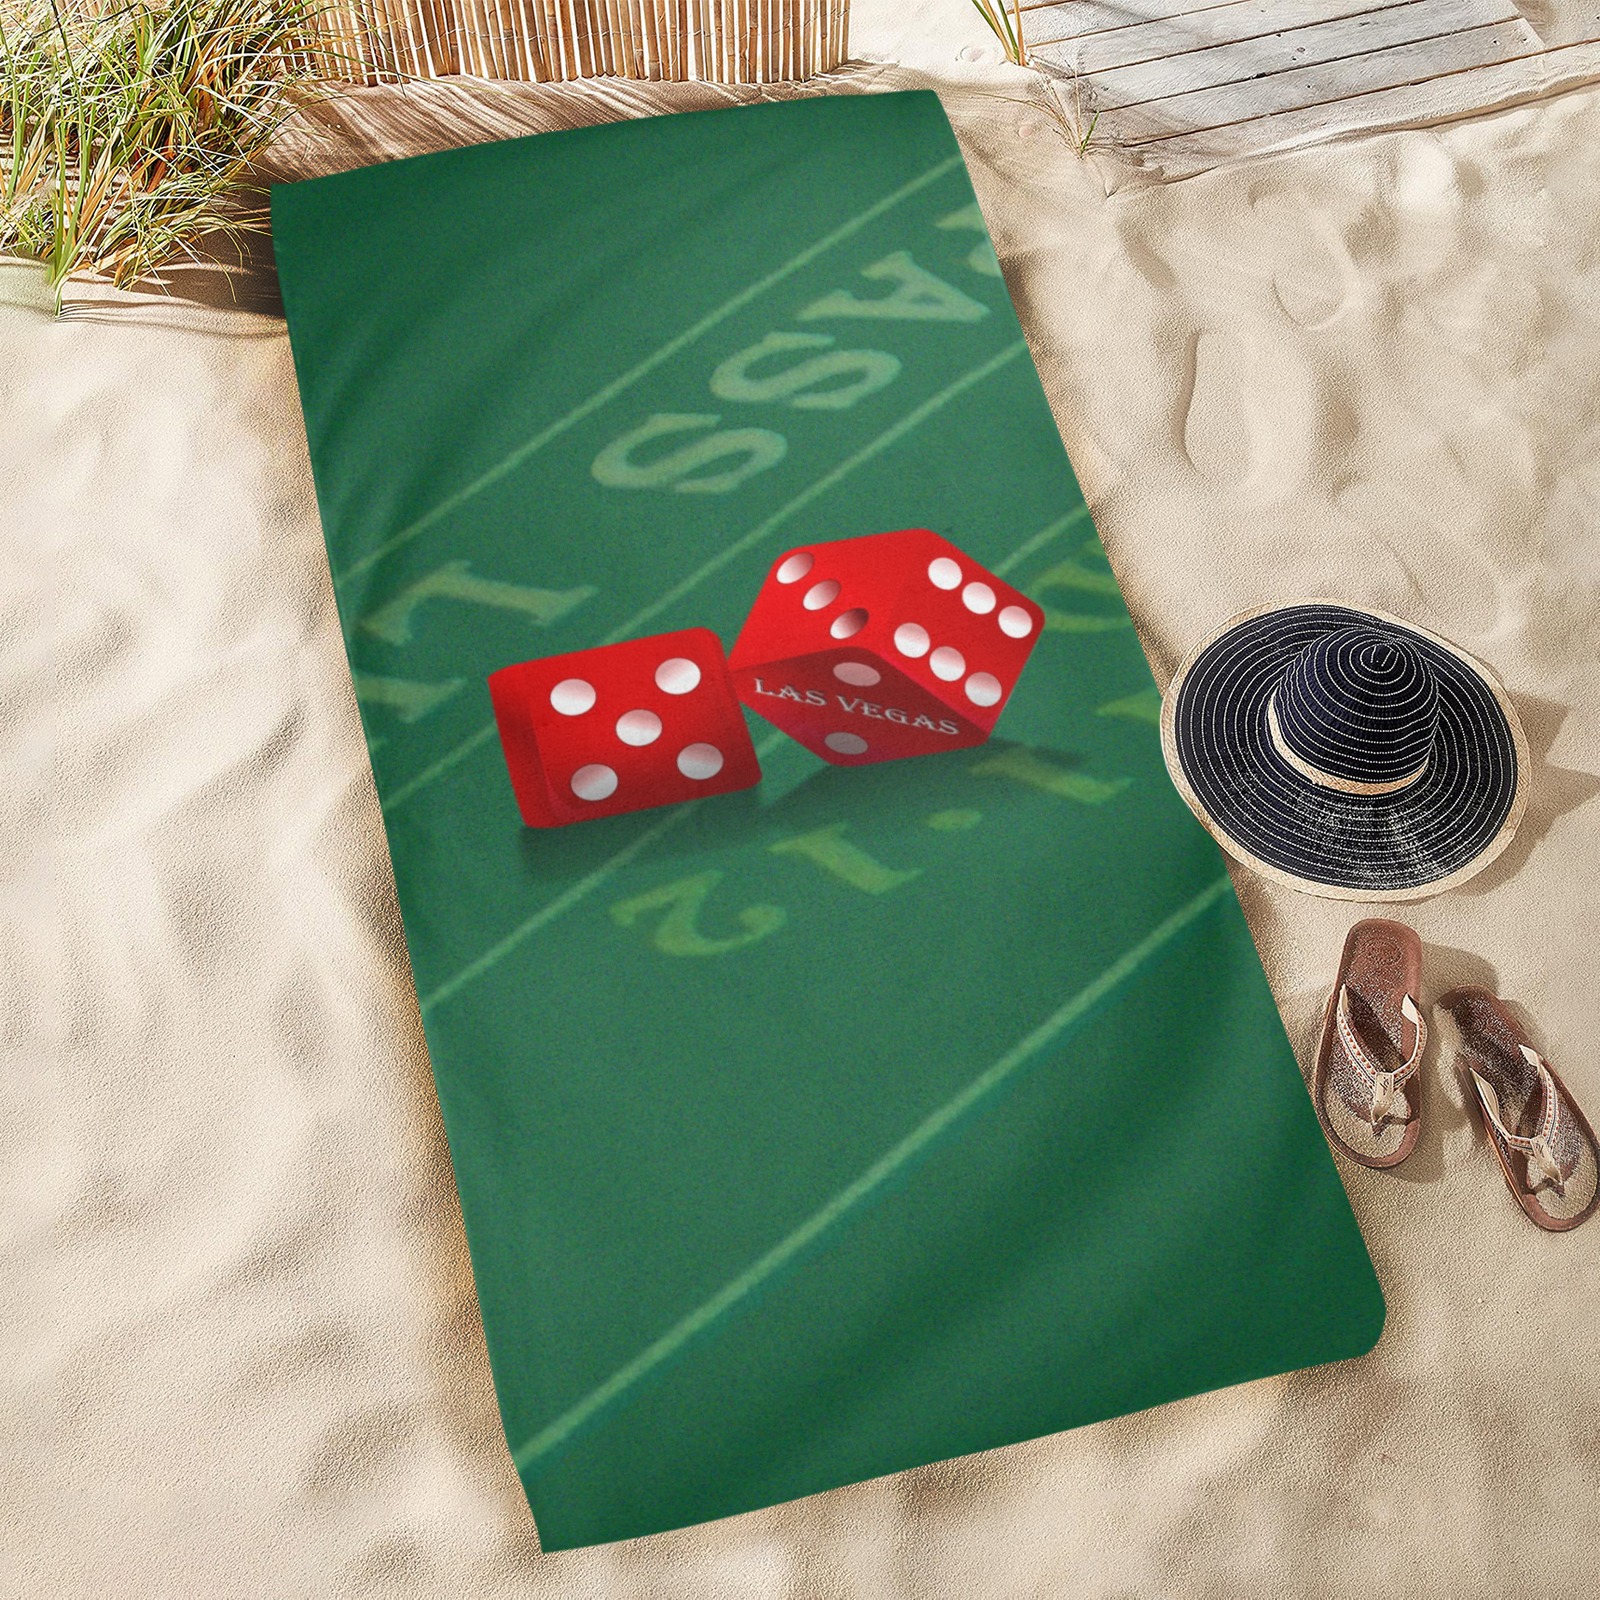 Las Vegas Dice on Craps Table Beach Towel 31"x71"(NEW)